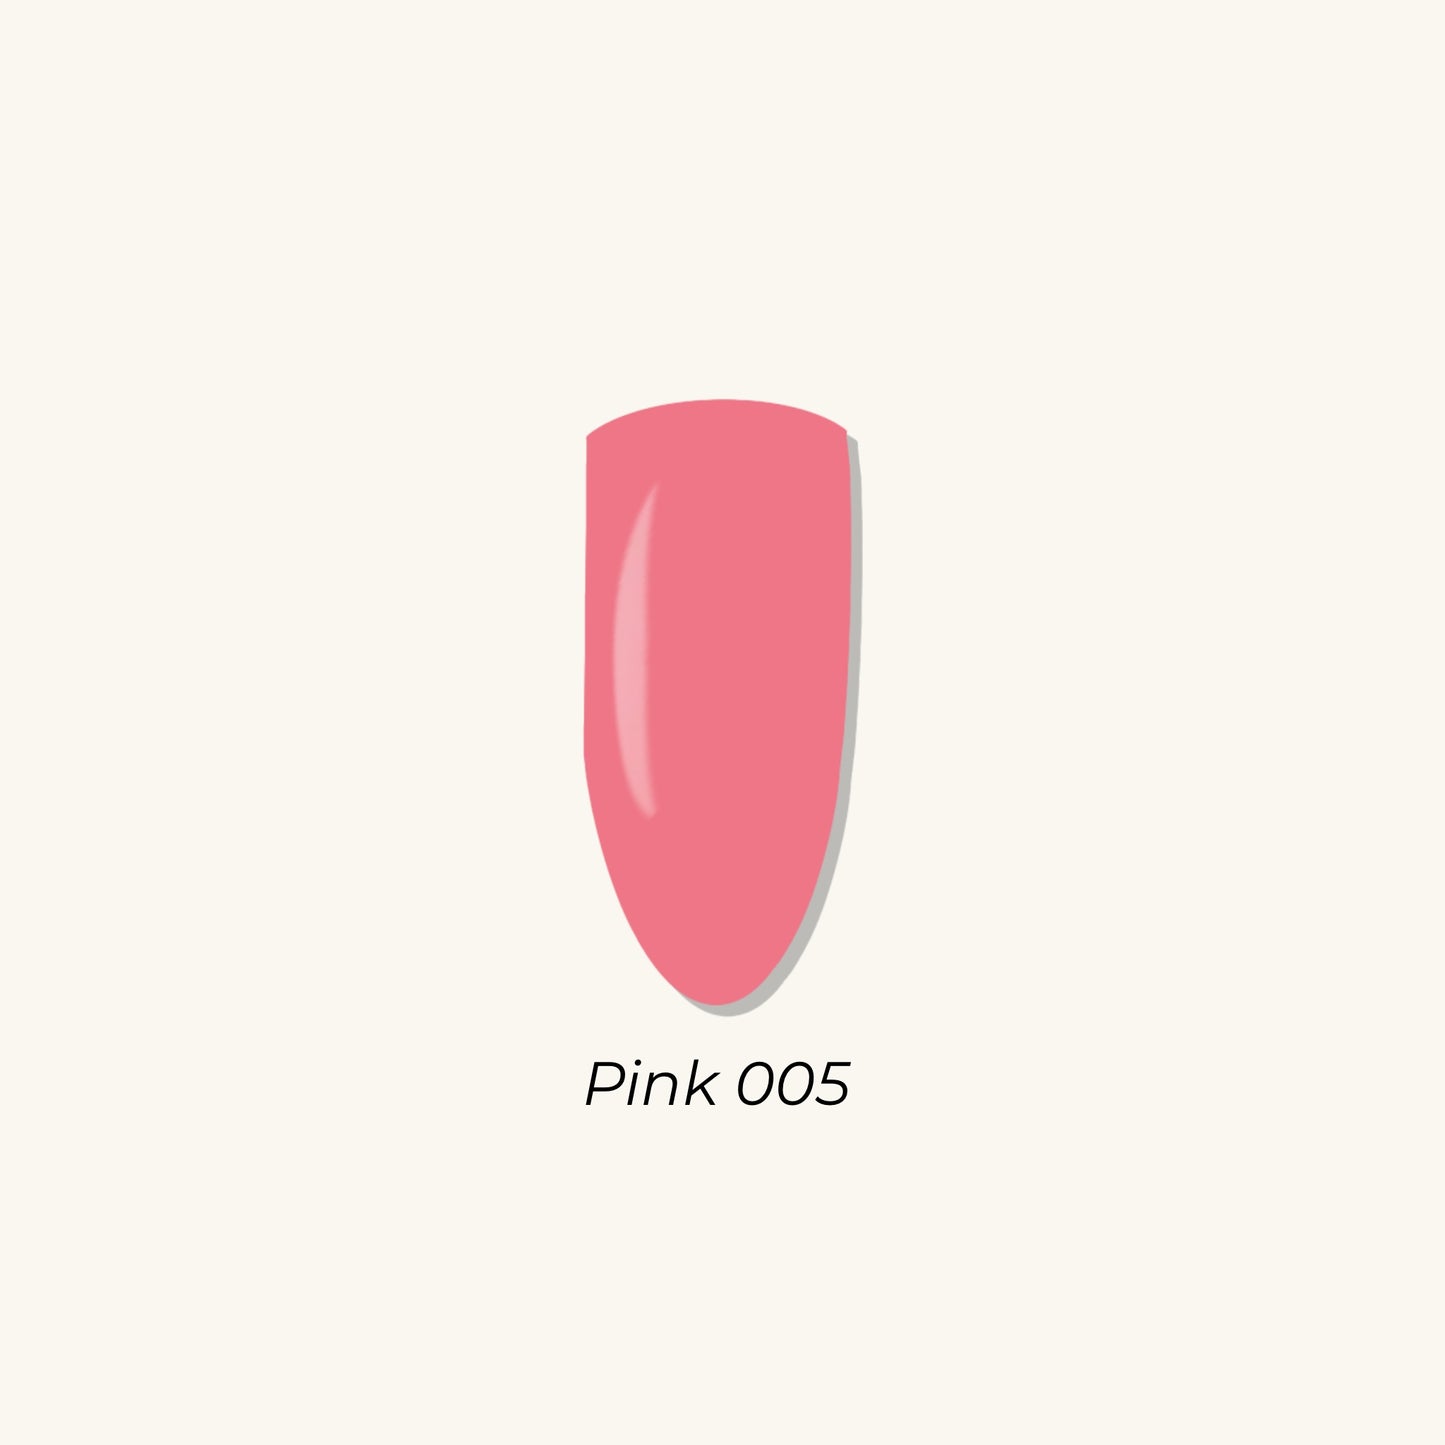 Pink 005